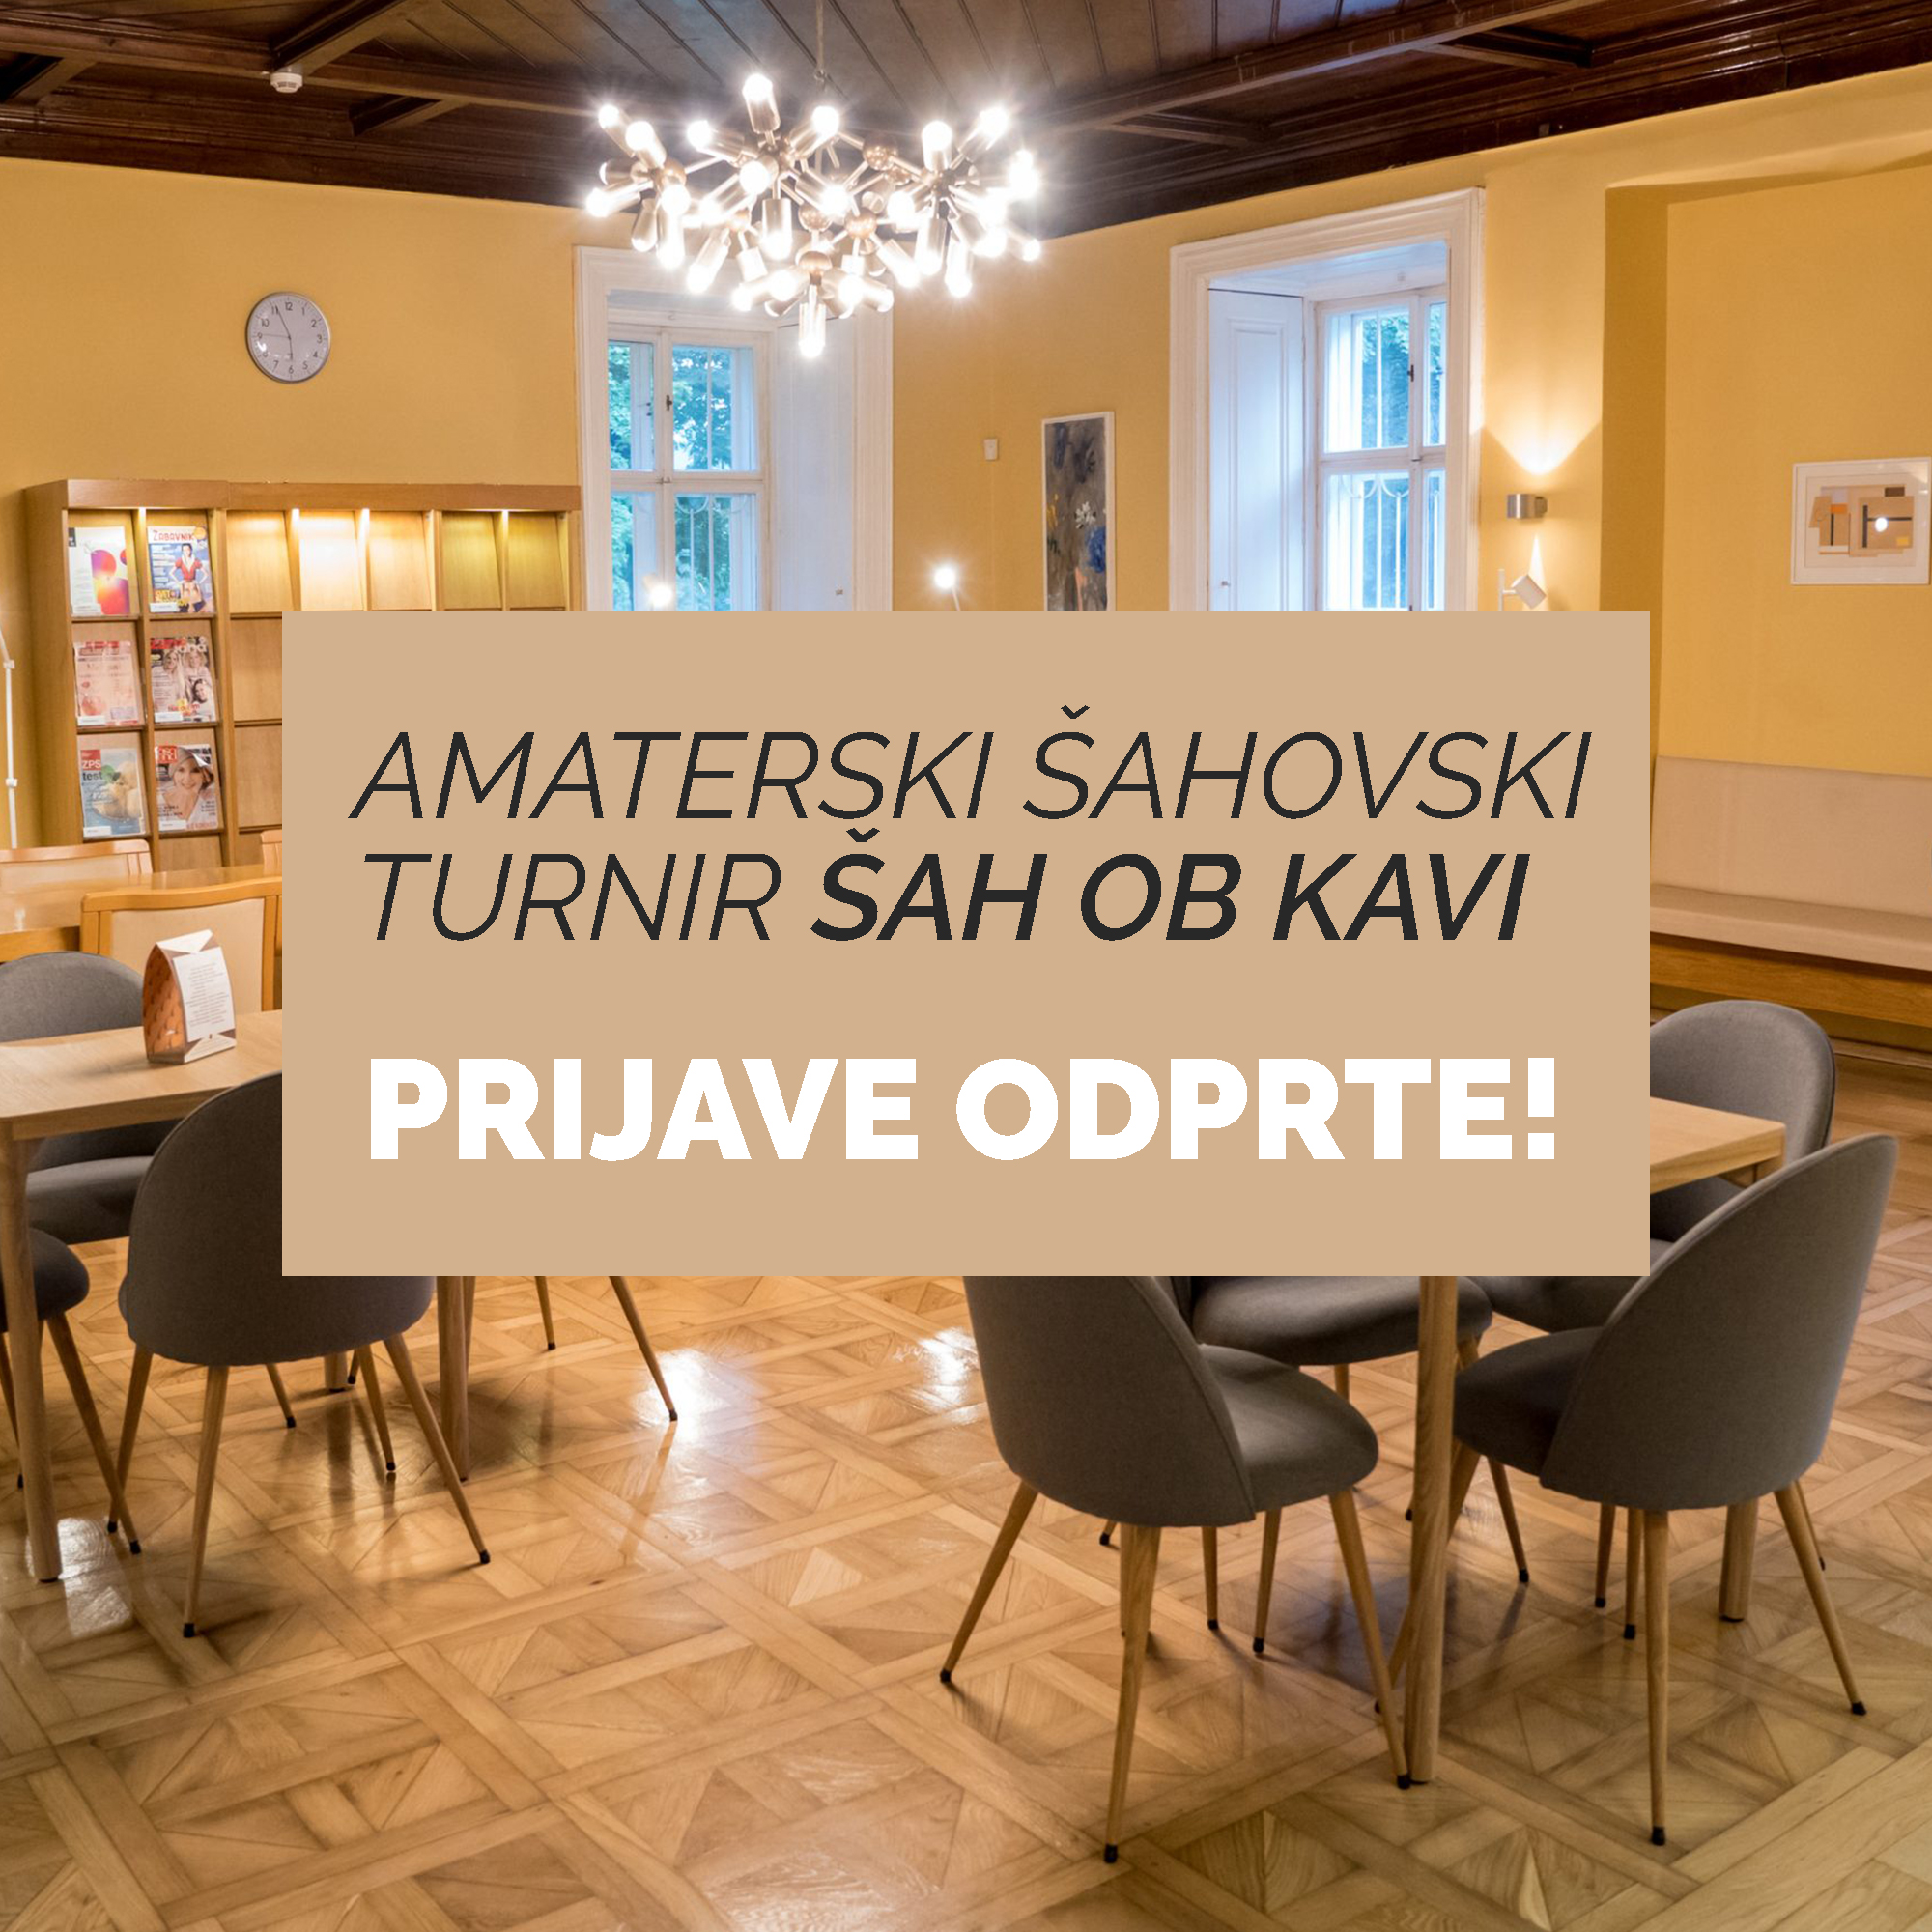 You are currently viewing Prijave na ŠAH OB KAVI